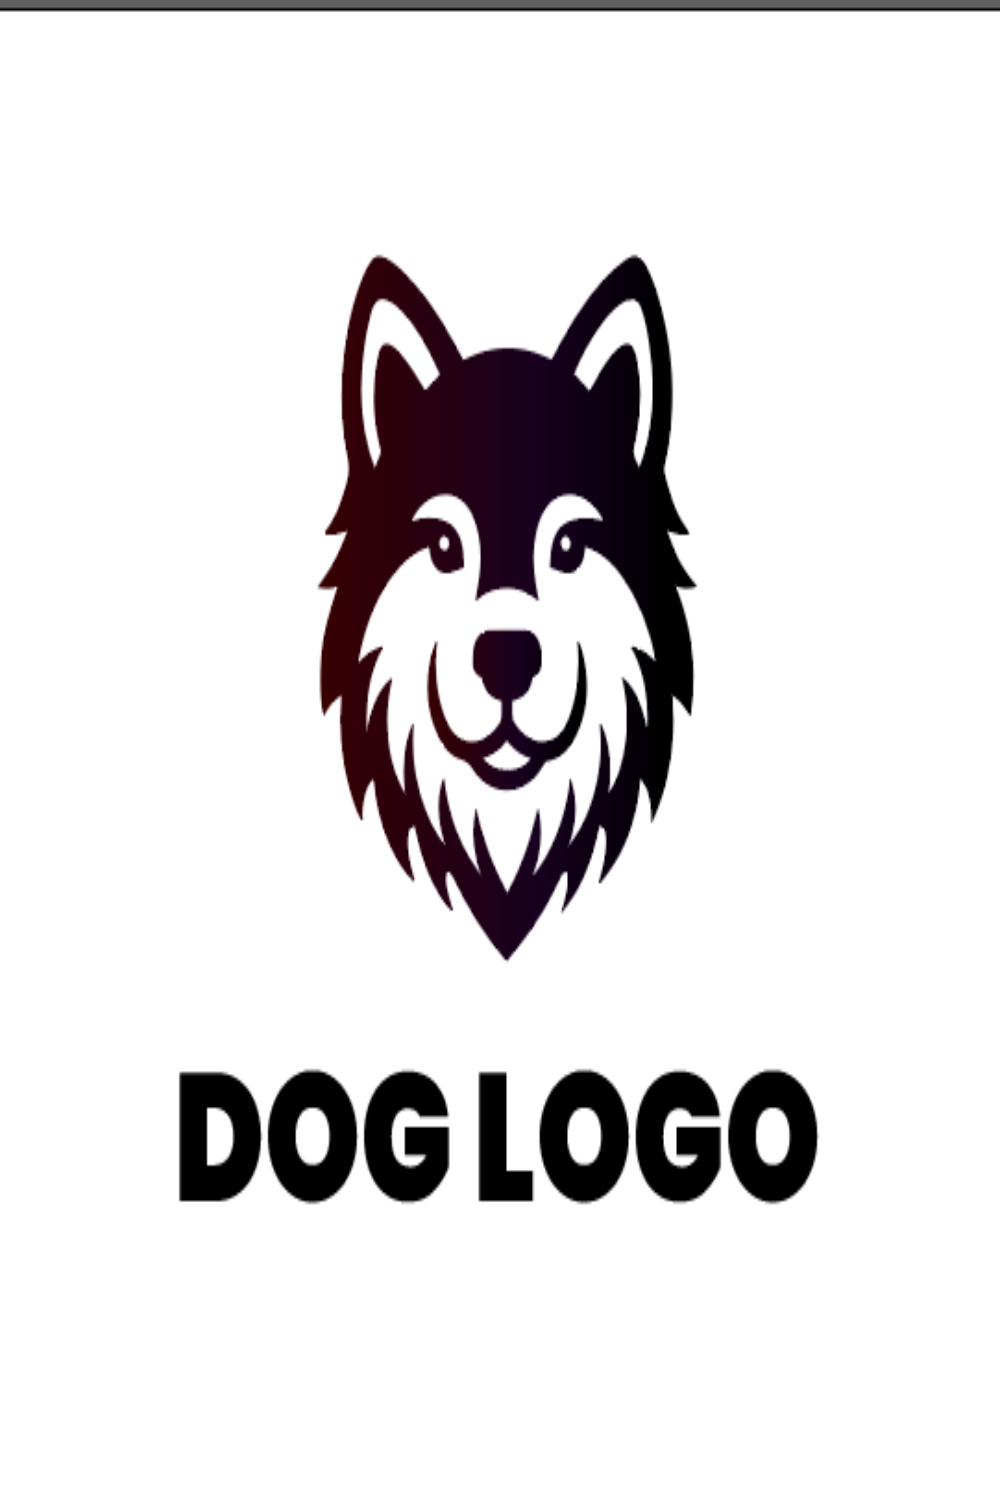 DOG Logo pinterest preview image.